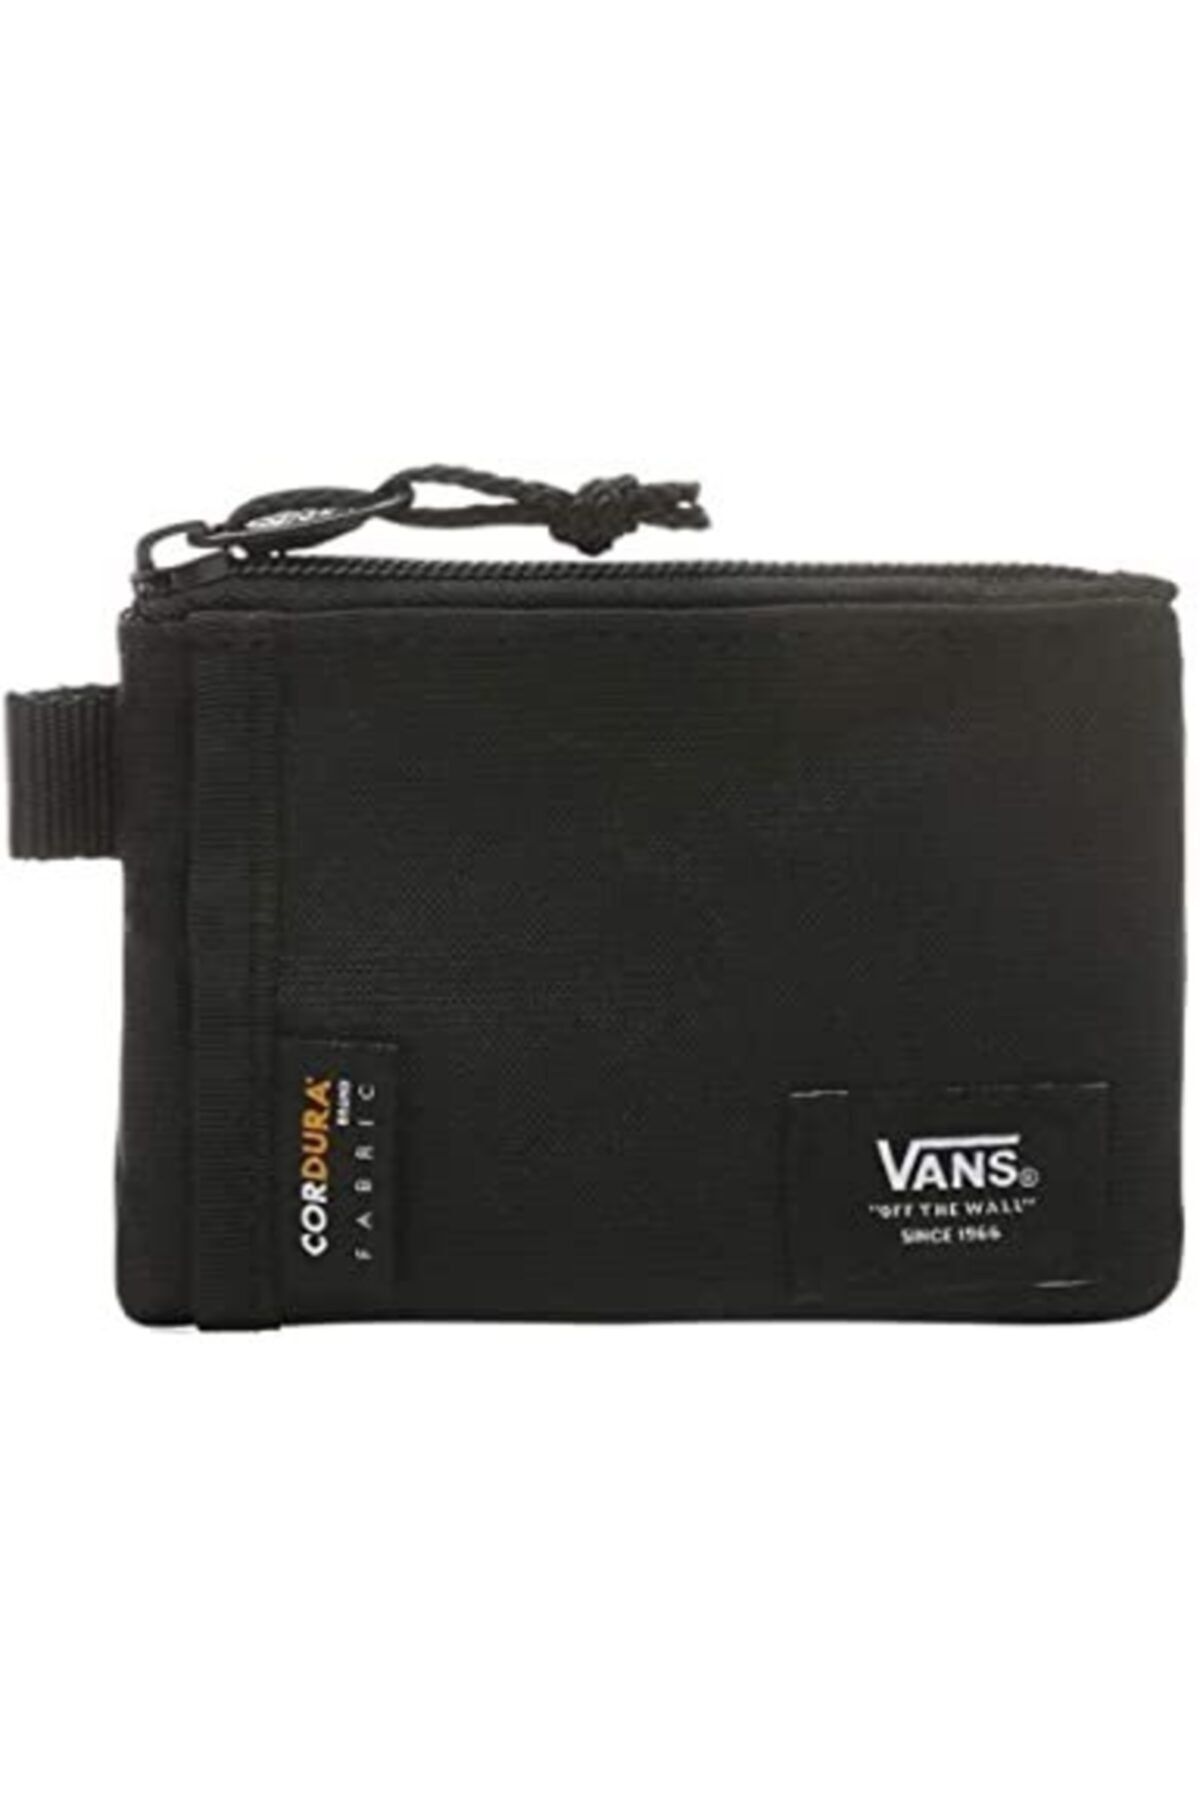 Vans Pouch Wallet